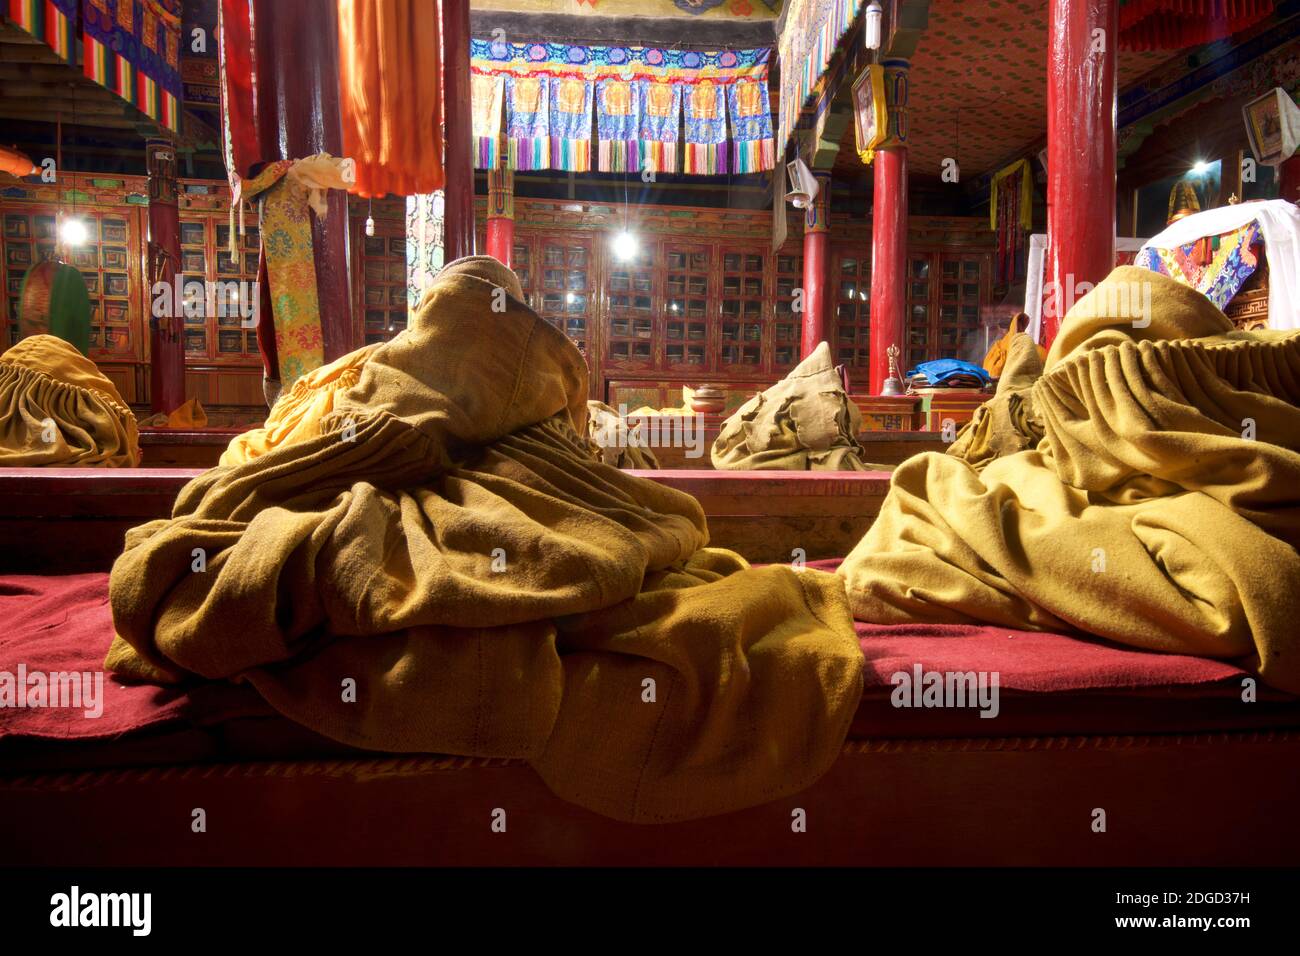 Monastic robes in the prayer hall at Likir monastery, Likir, Ladakh, Jammu and Kashmir, India Stock Photo